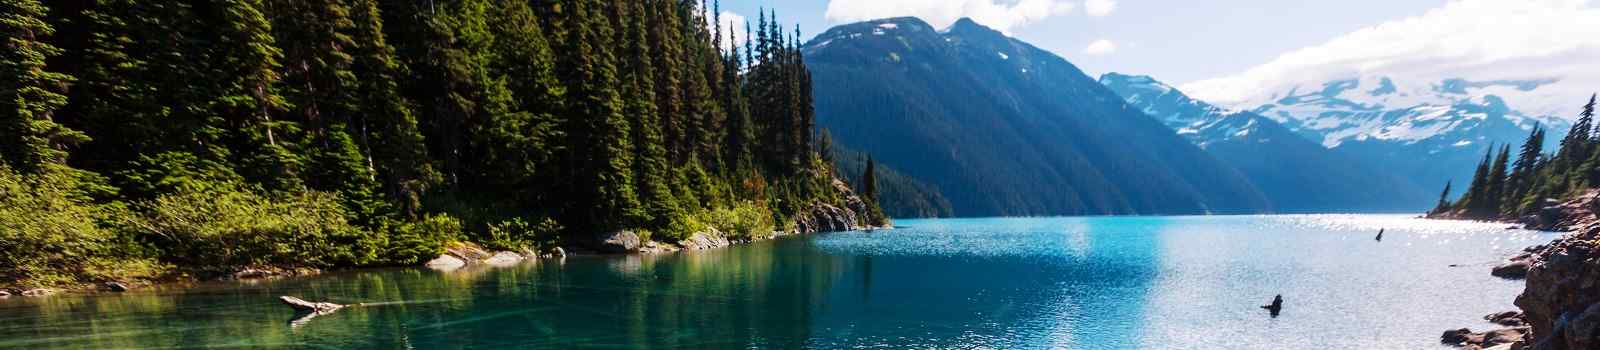 CA-SPIRIT-BEAR-LODGE Hike to turquoise Garibaldi Lake near Whistler  BC  Canada shutterstock 488866768